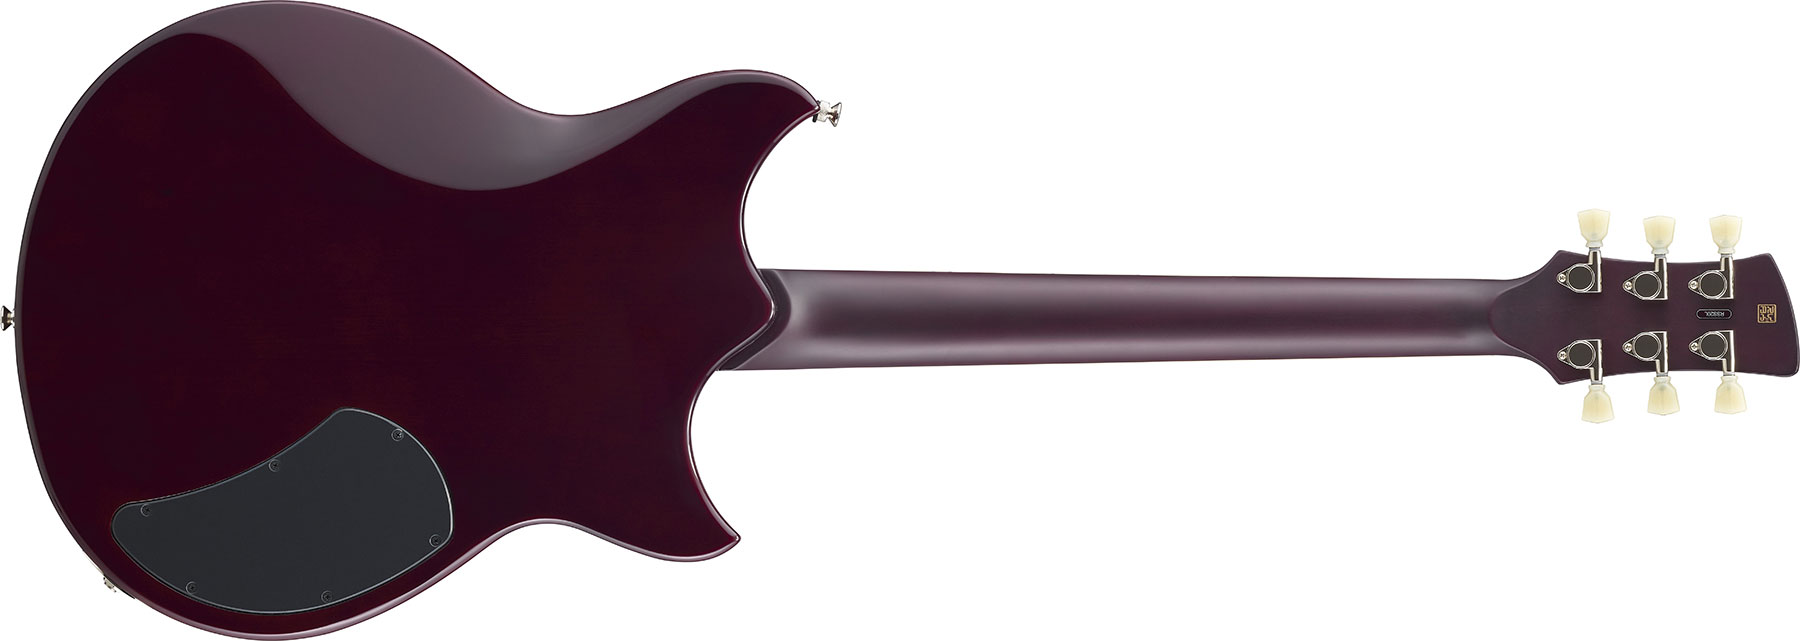 Yamaha Rss20l Revstar Standard Lh Gaucher Hh Ht Rw - Black - Guitarra electrica para zurdos - Variation 2